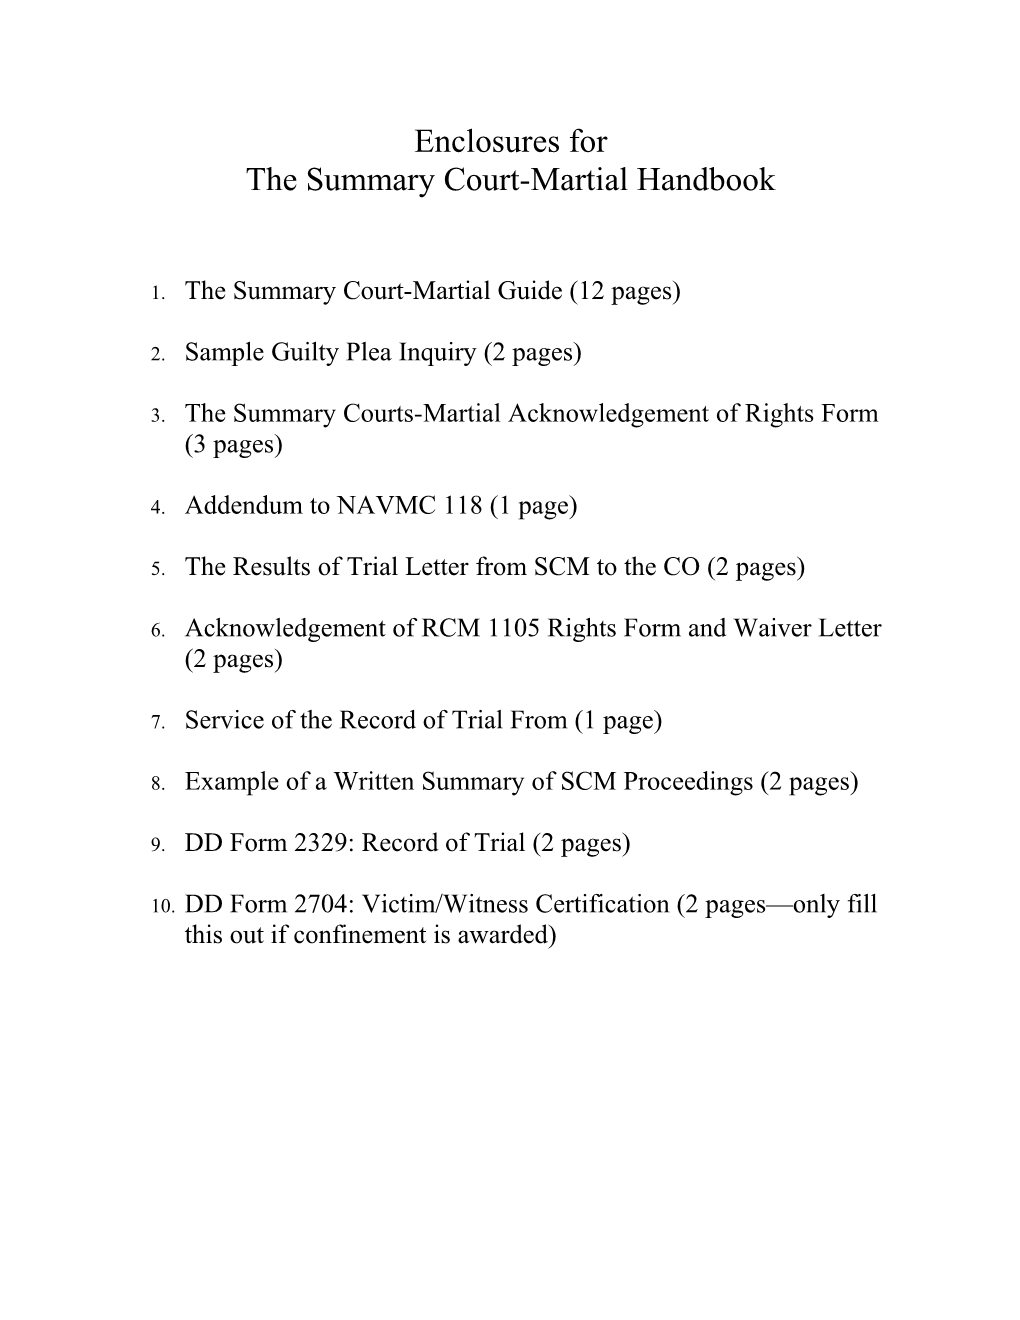 The Summary Court-Martial Handbook